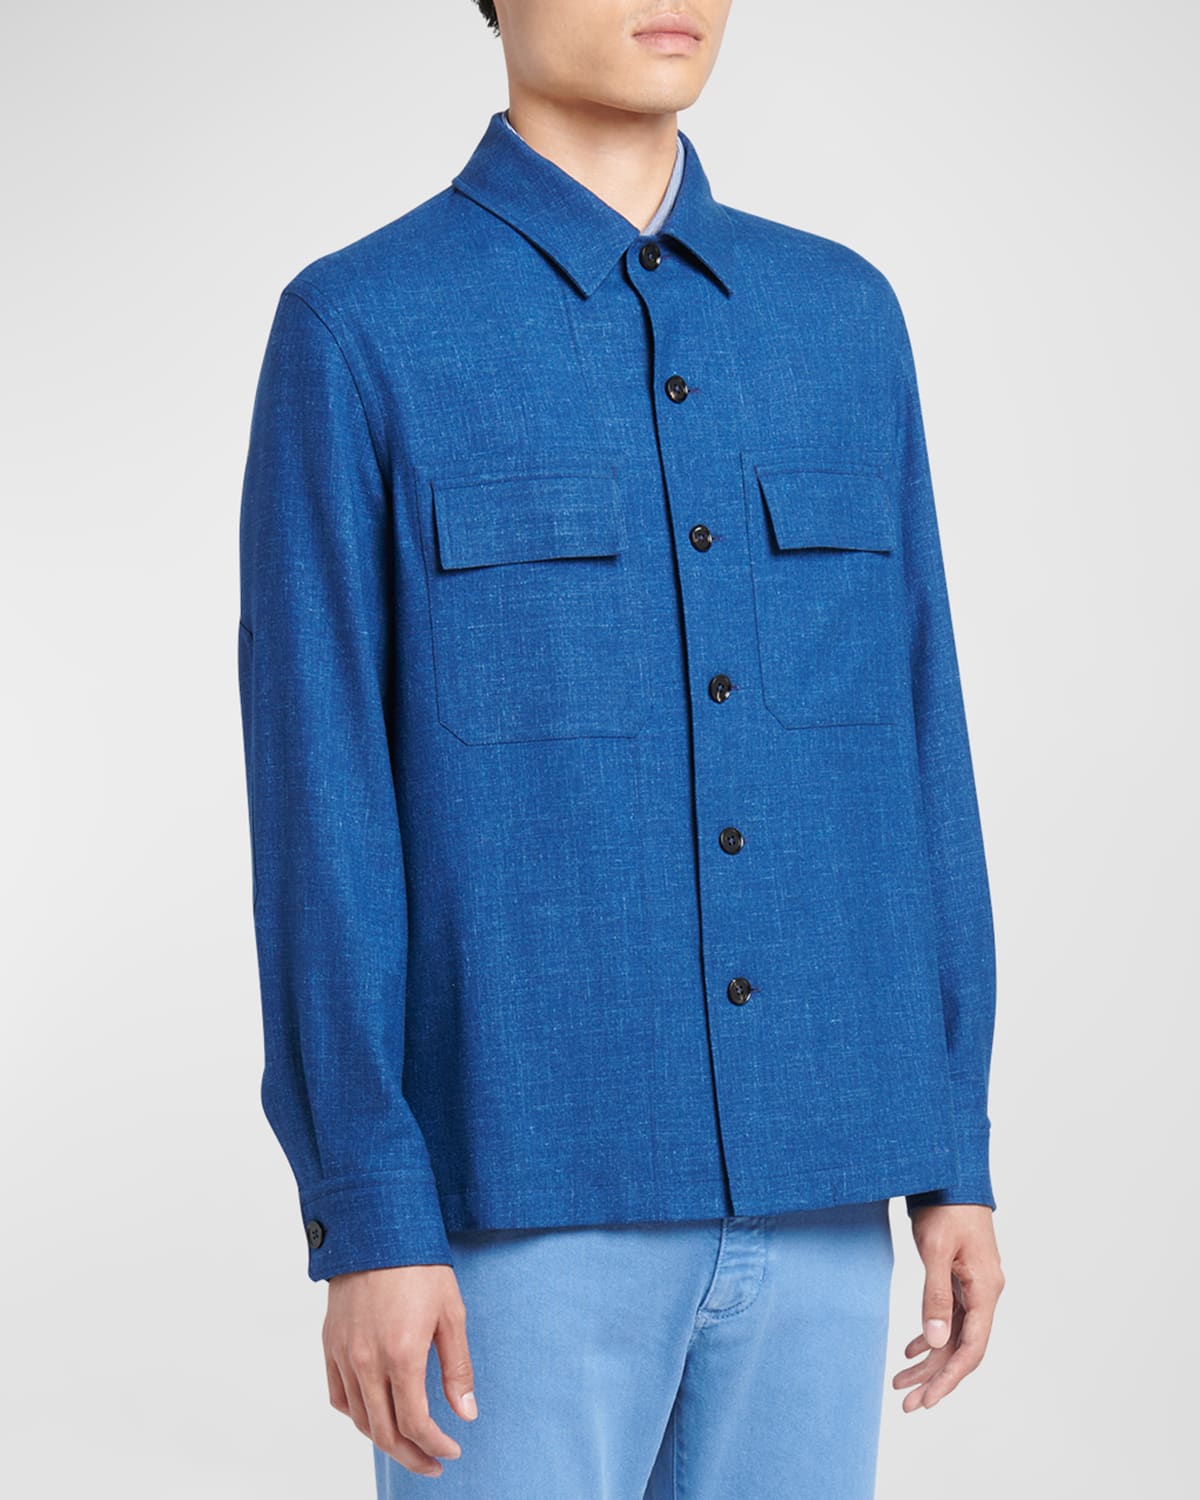 Zegna 同色系缝线羊绒亚麻衬衫 In Dark Blue Solid